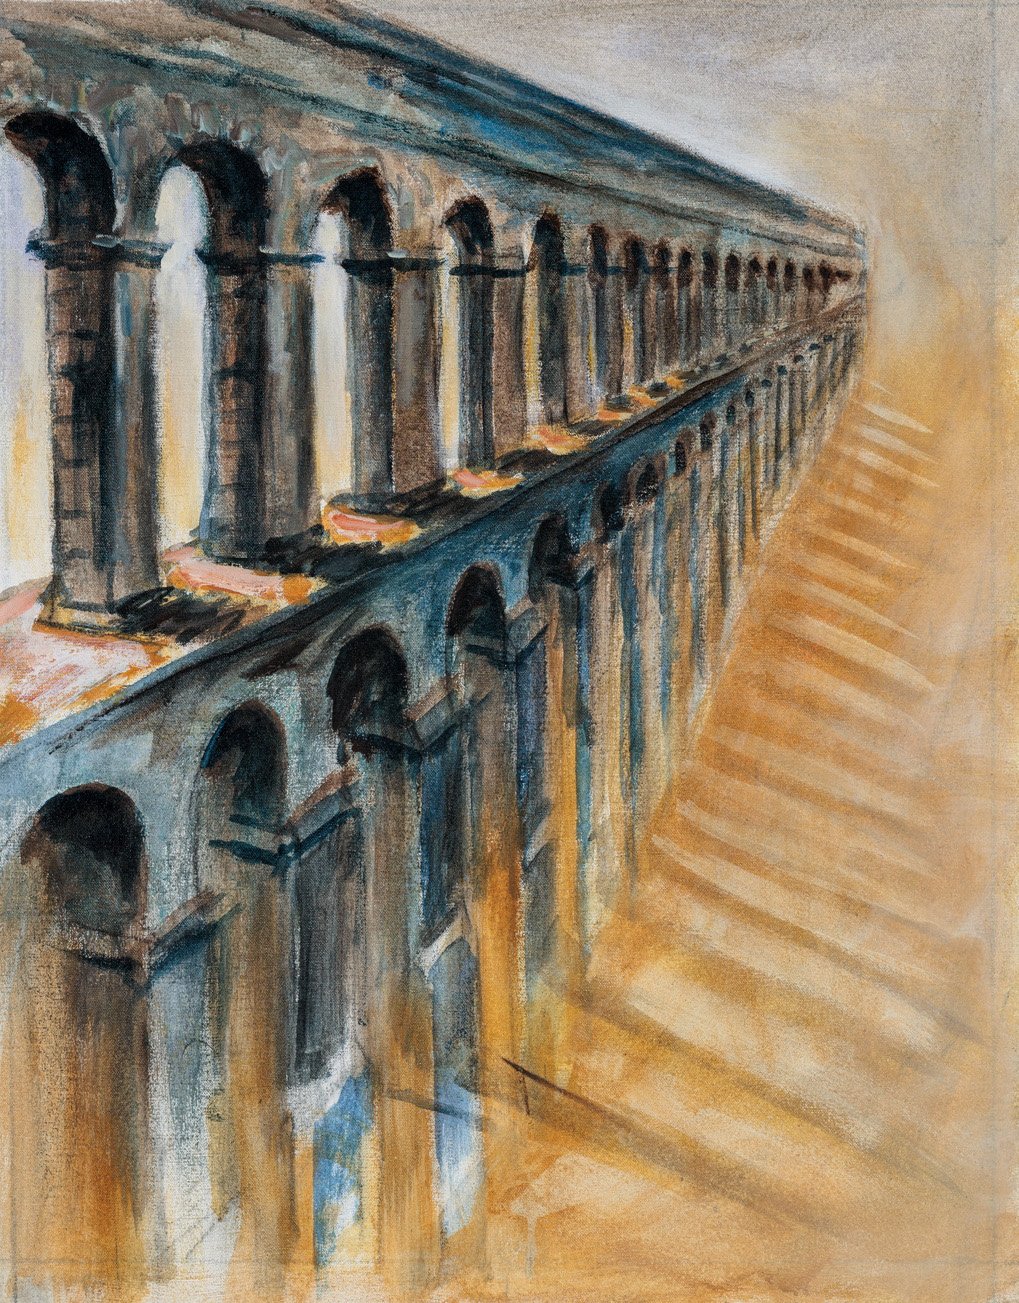 Aquaduct Ruin, Italy - 30” x 24”, Acrylic on Canvas, $1200